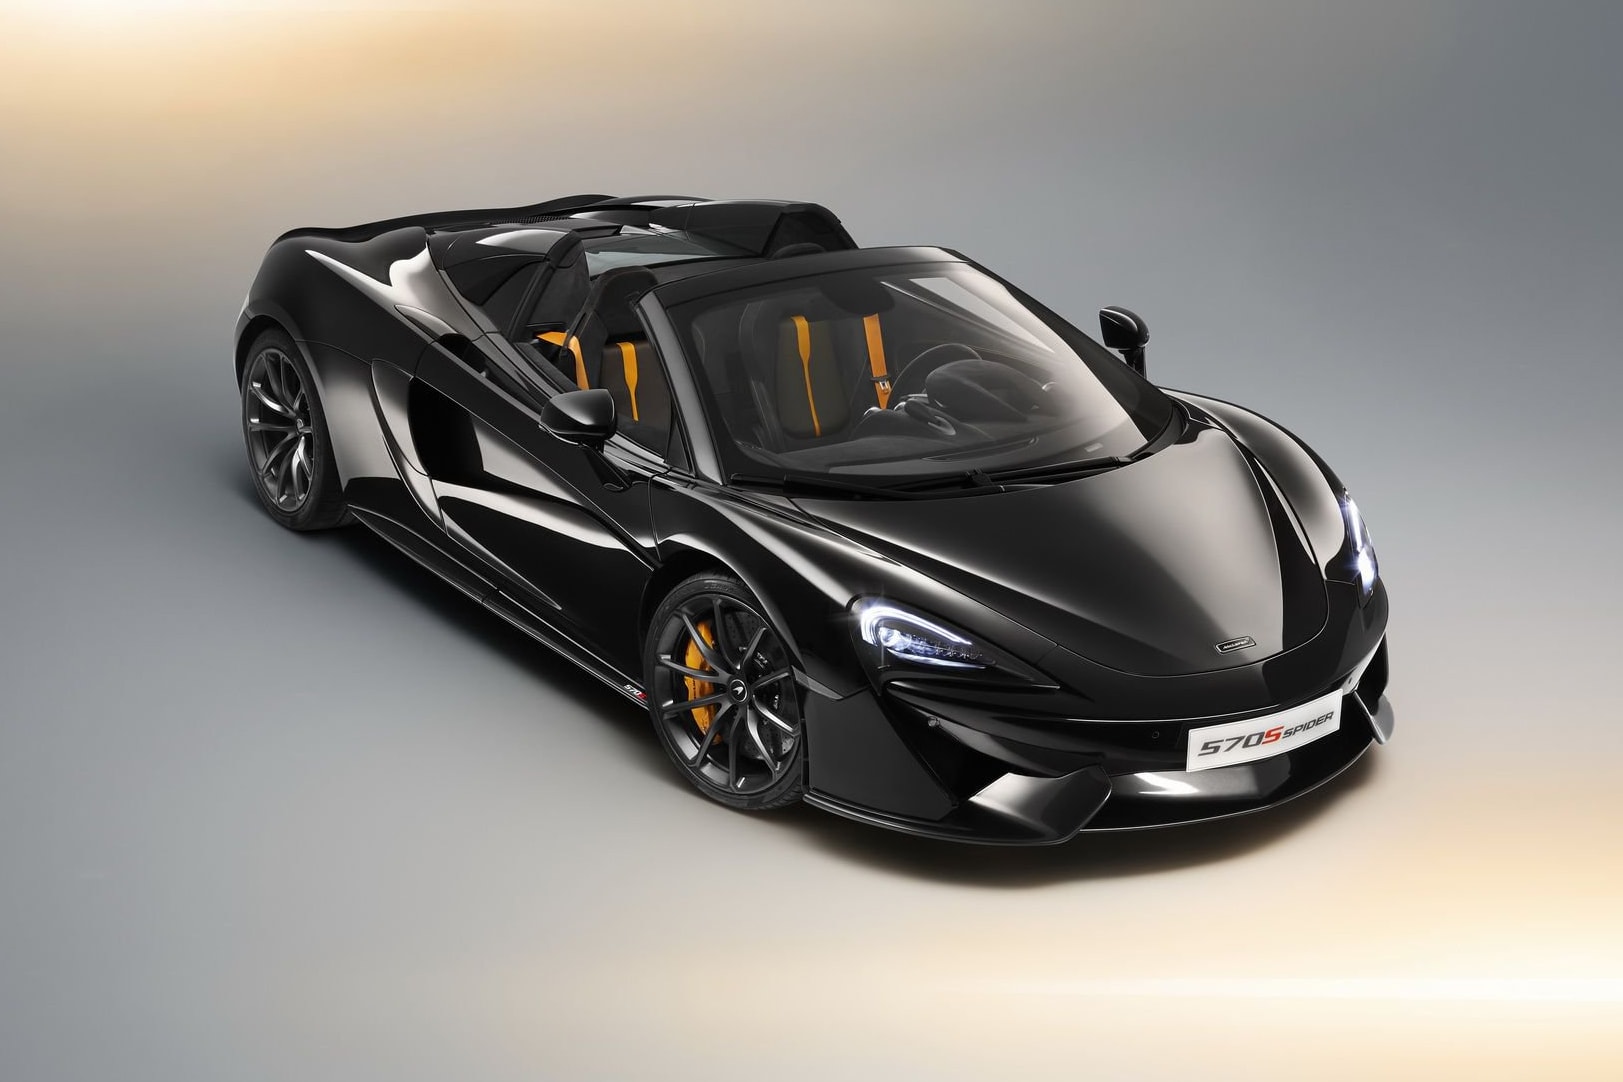 McLaren 為敞篷跑車 570S Spider 推出全新「Design Editions」客製選項